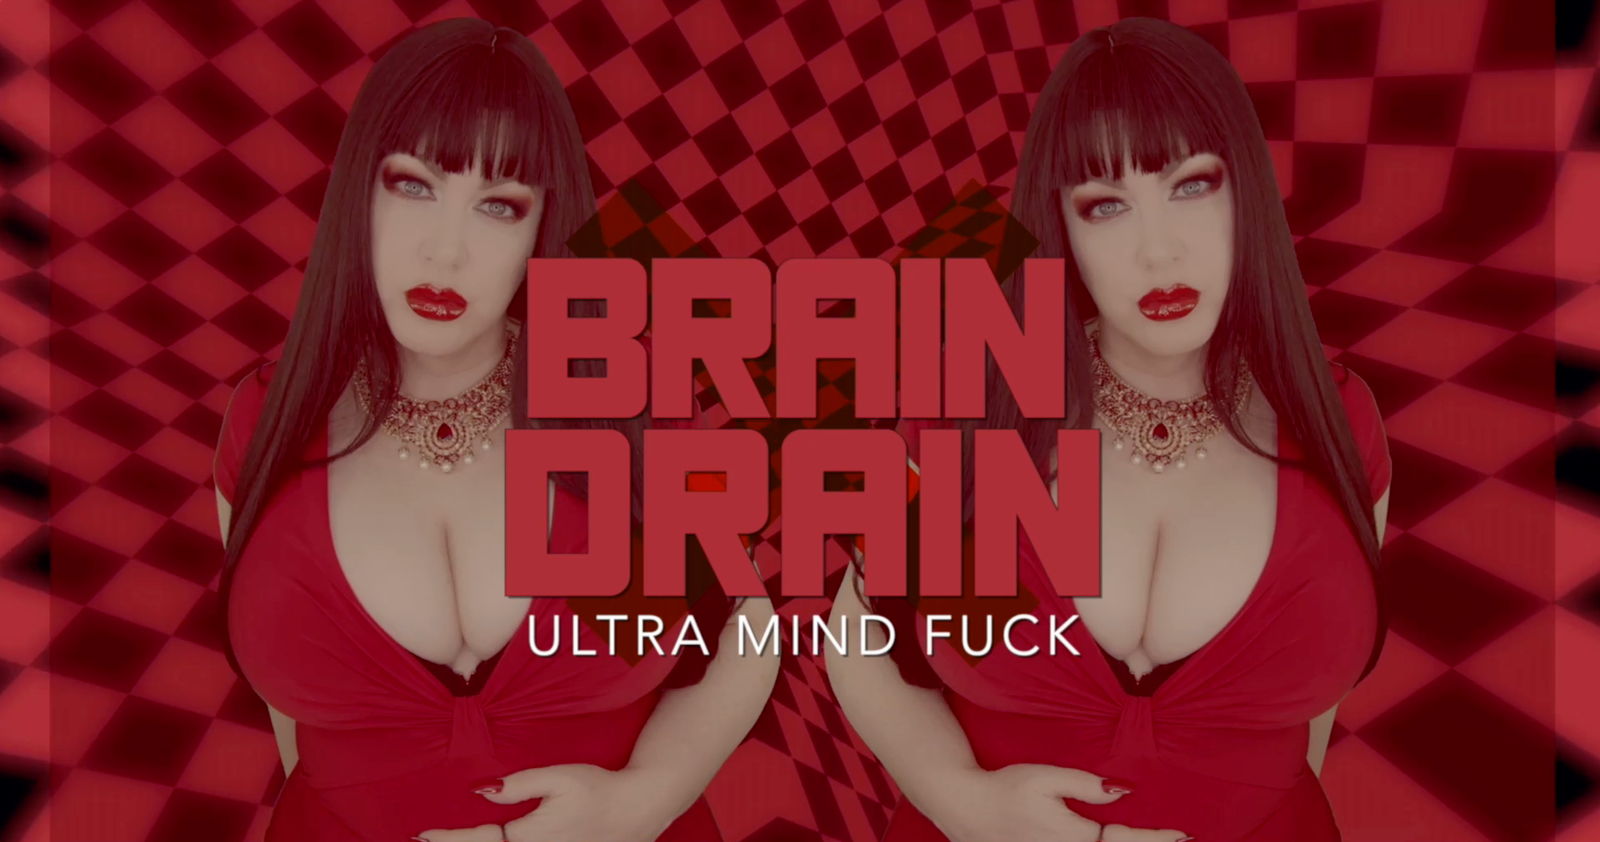 Brain drain erotica